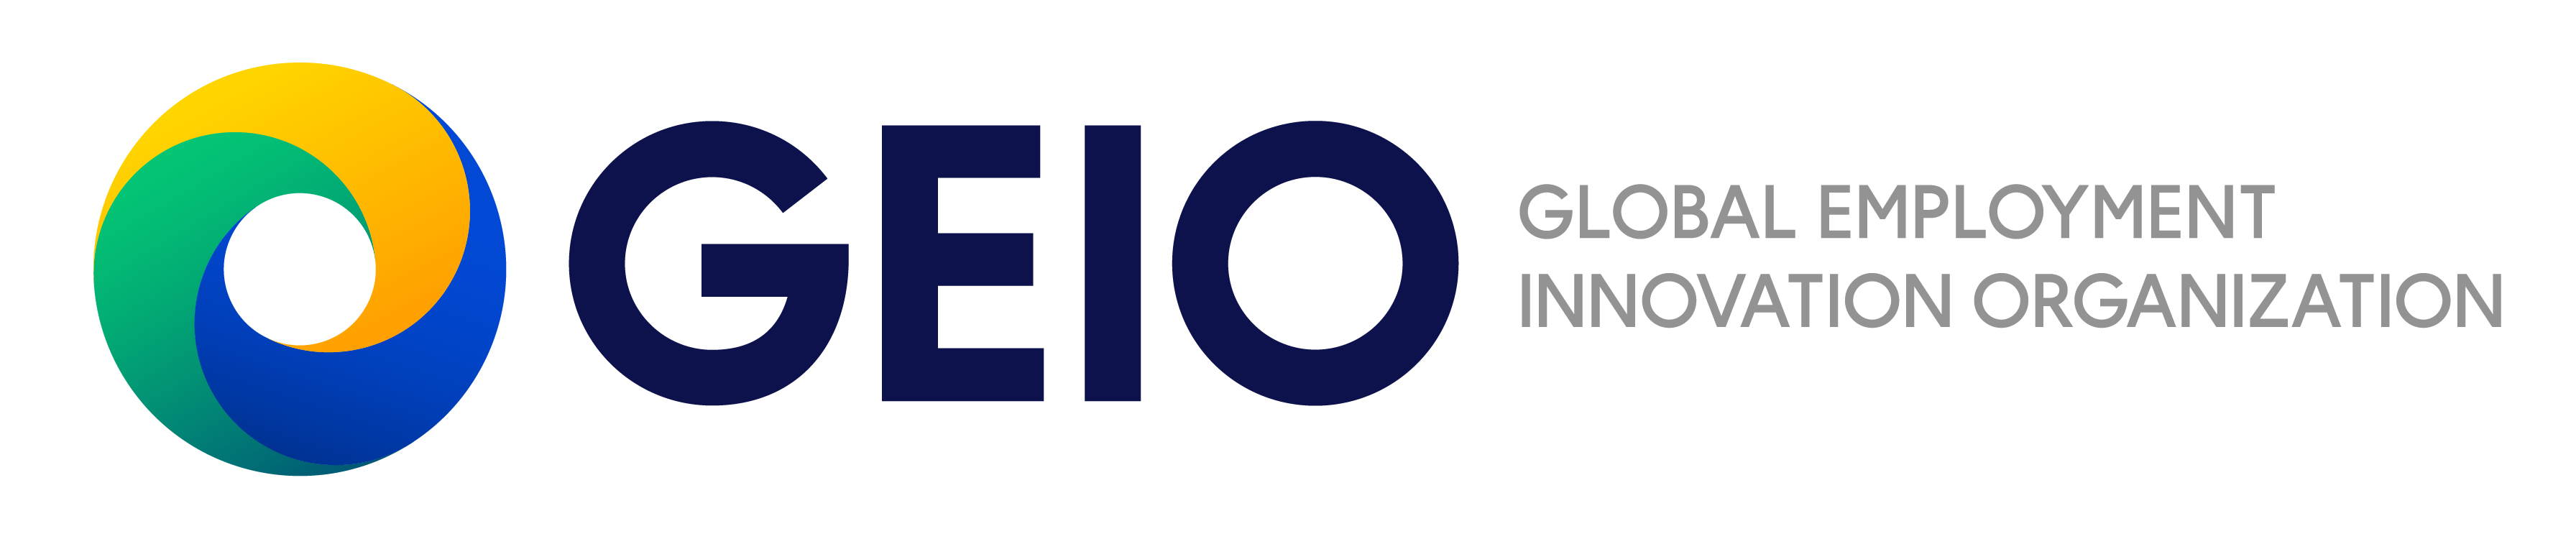 Global Employment Innovation Organization (GEIO)